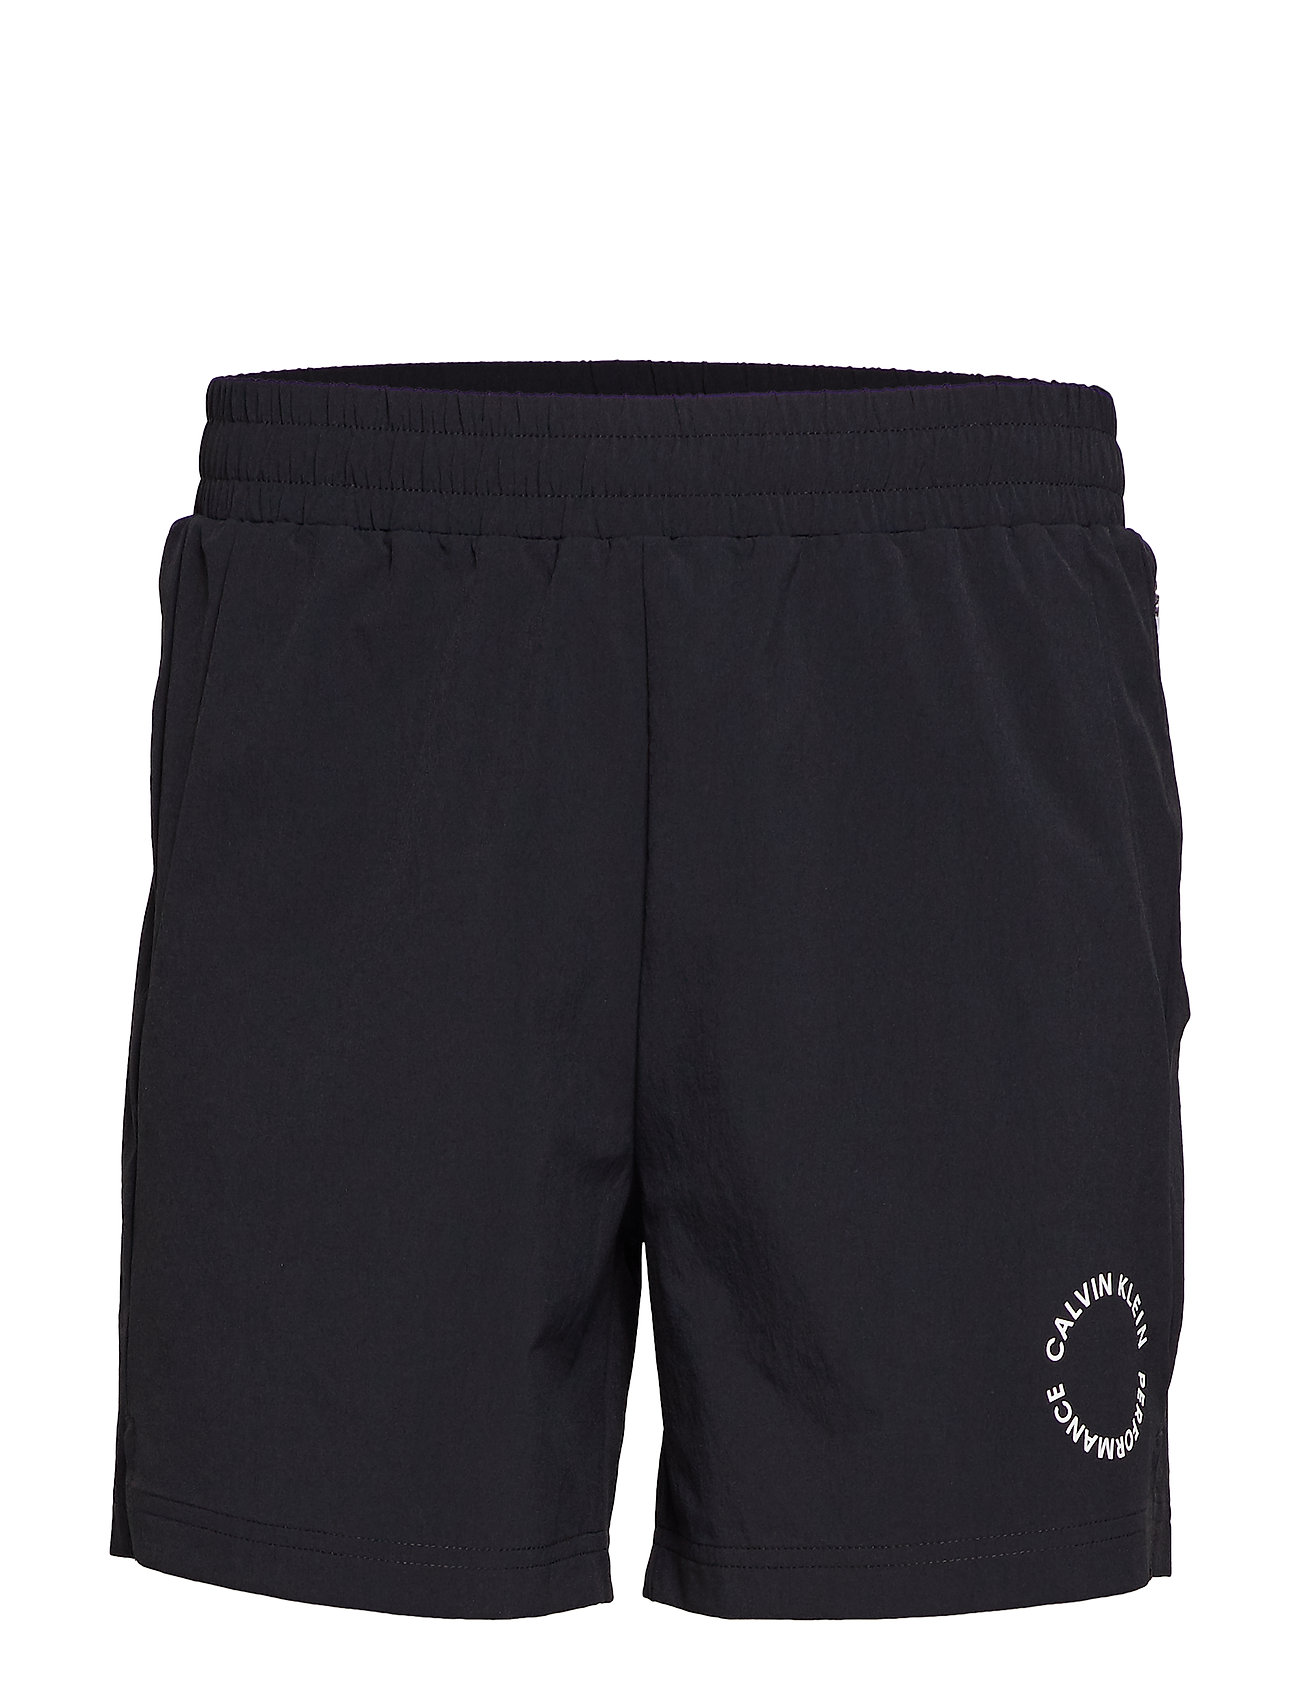 calvin klein performance shorts